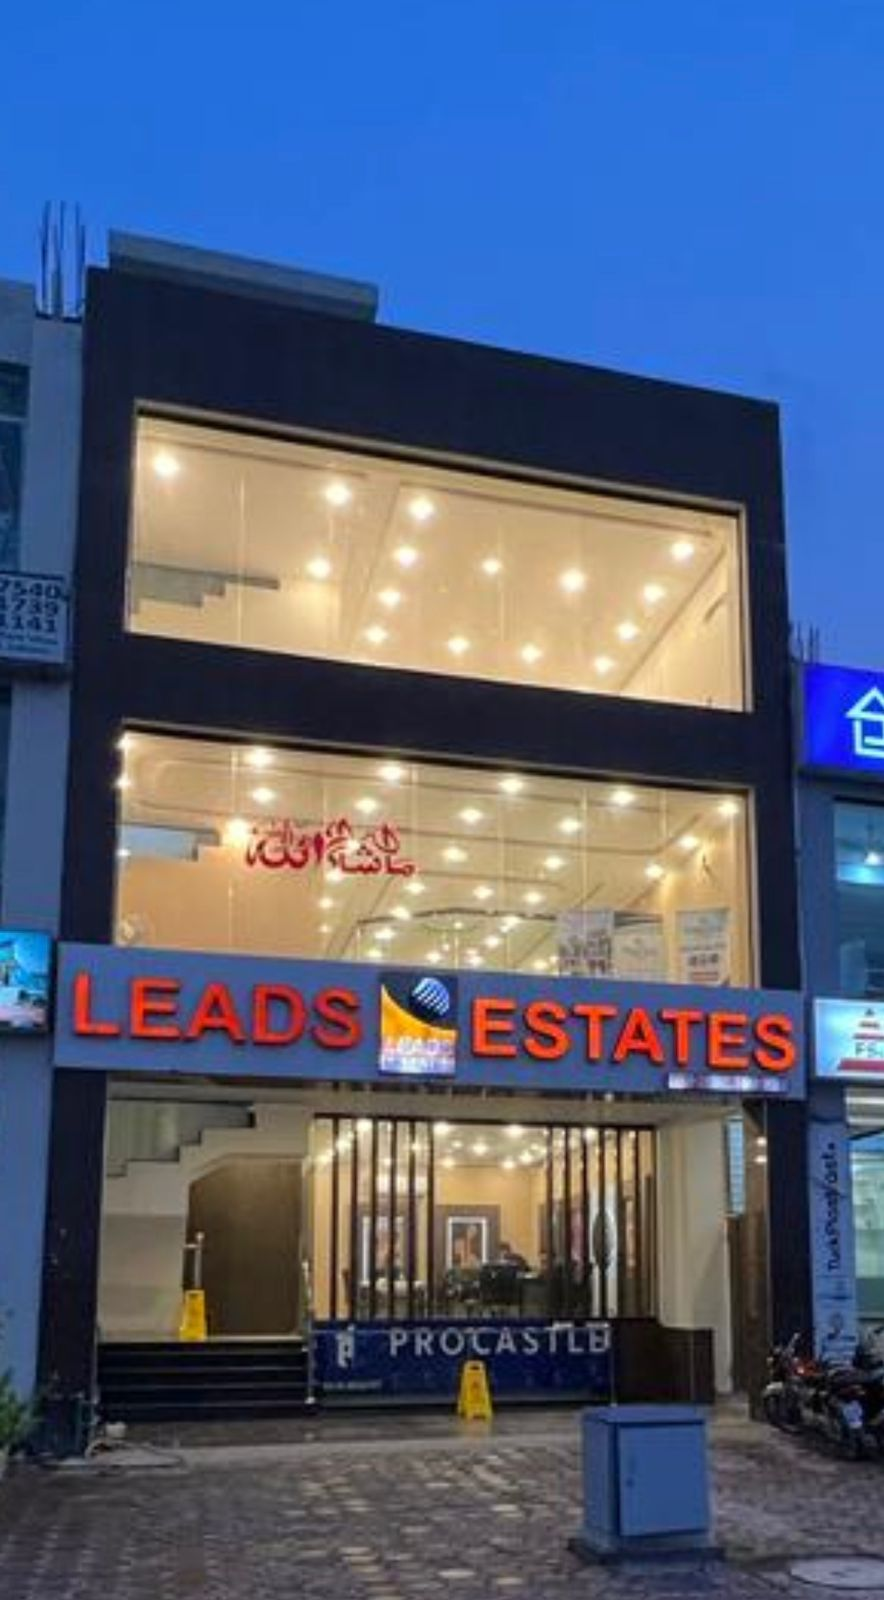 Leads Estates Office Image